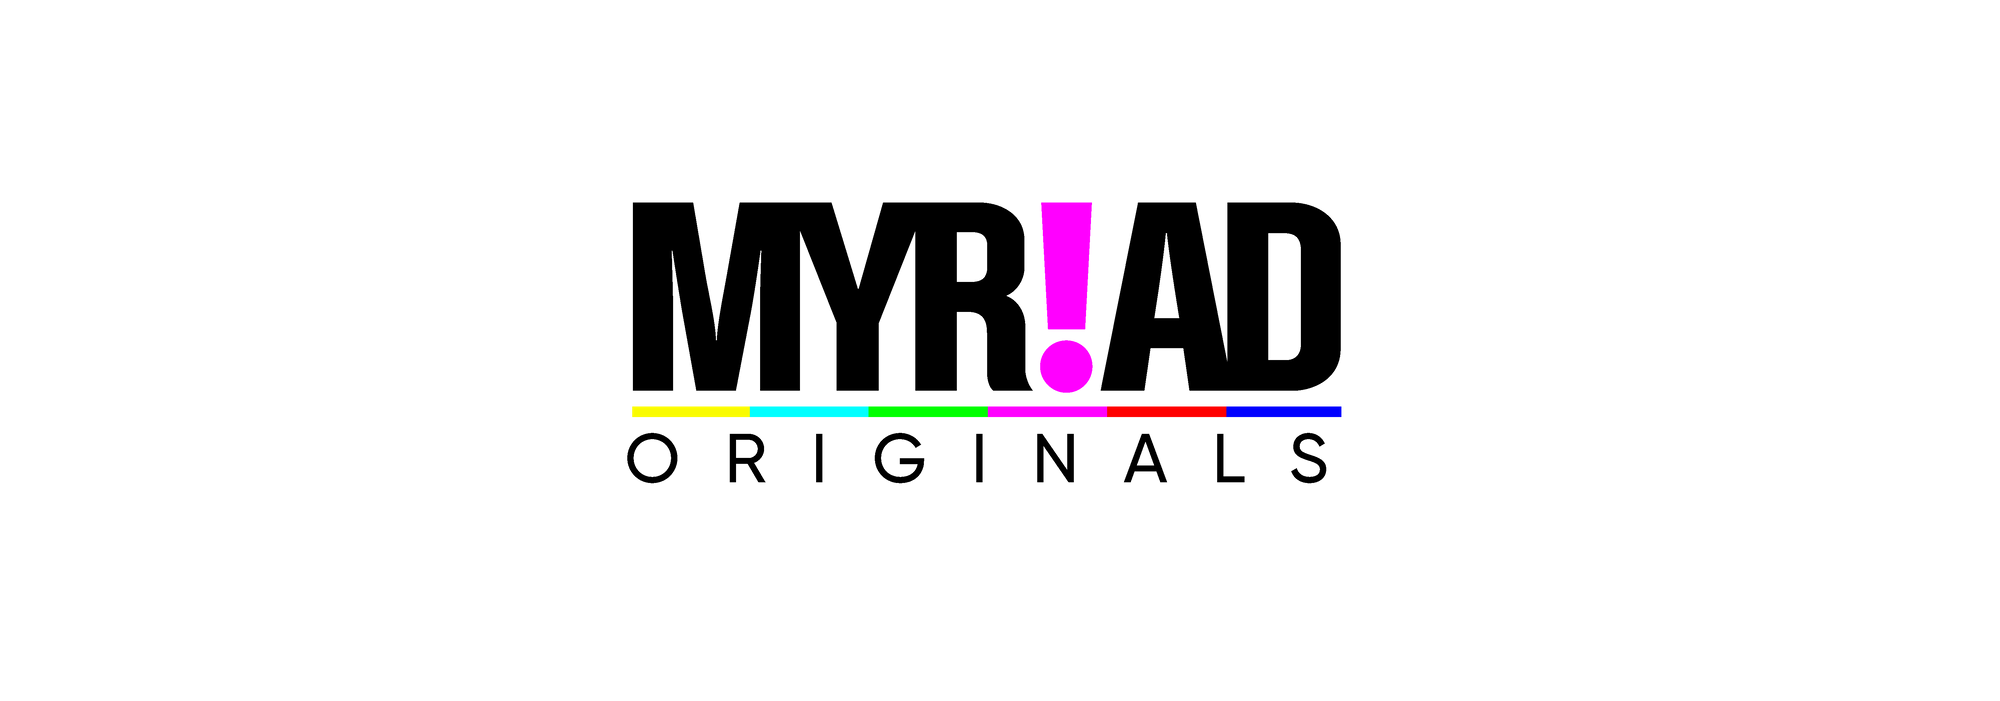 Myriad Originals logo